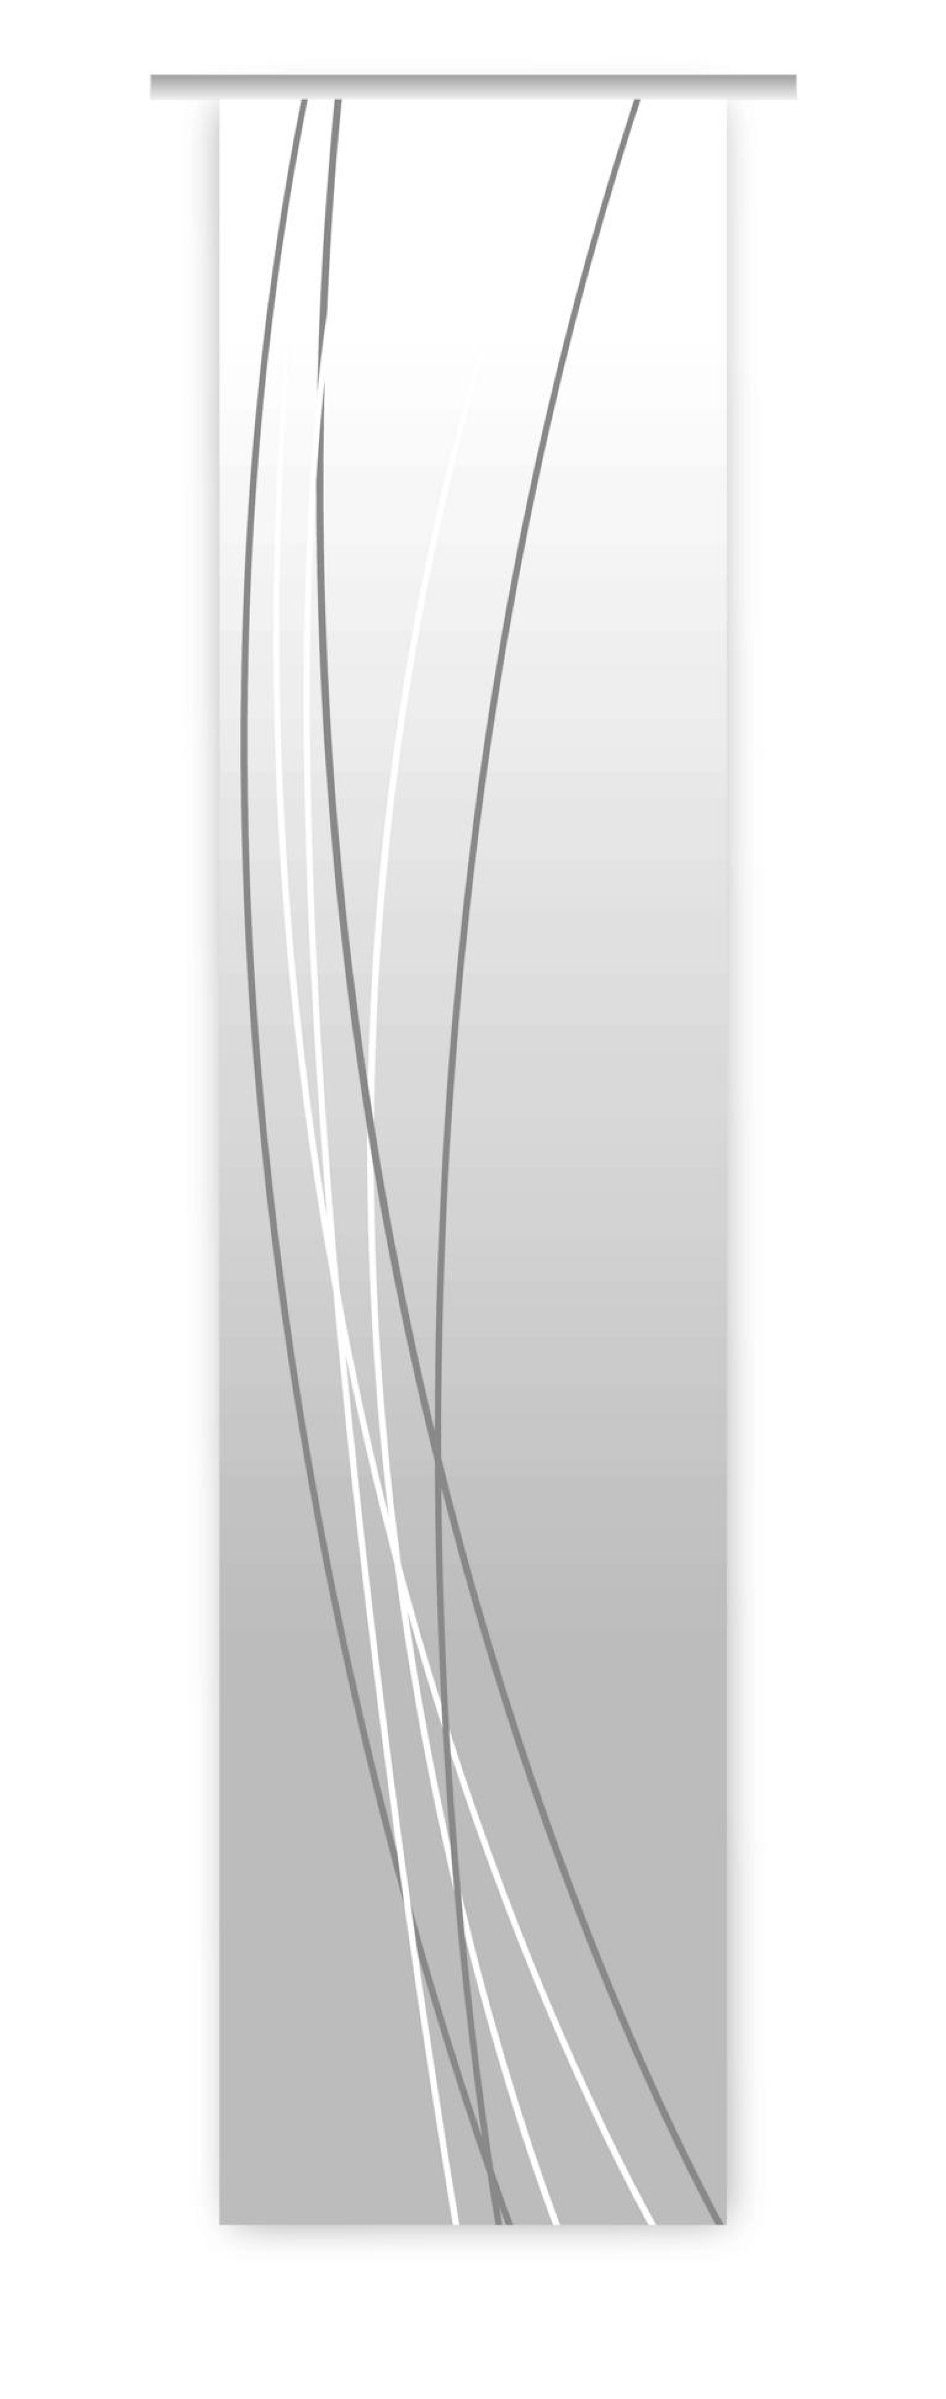 Schiebegardine Linea dunkelgrau up dark Schiebevorhang HxB 260x60 cm -  B-line, gardinen-for-life